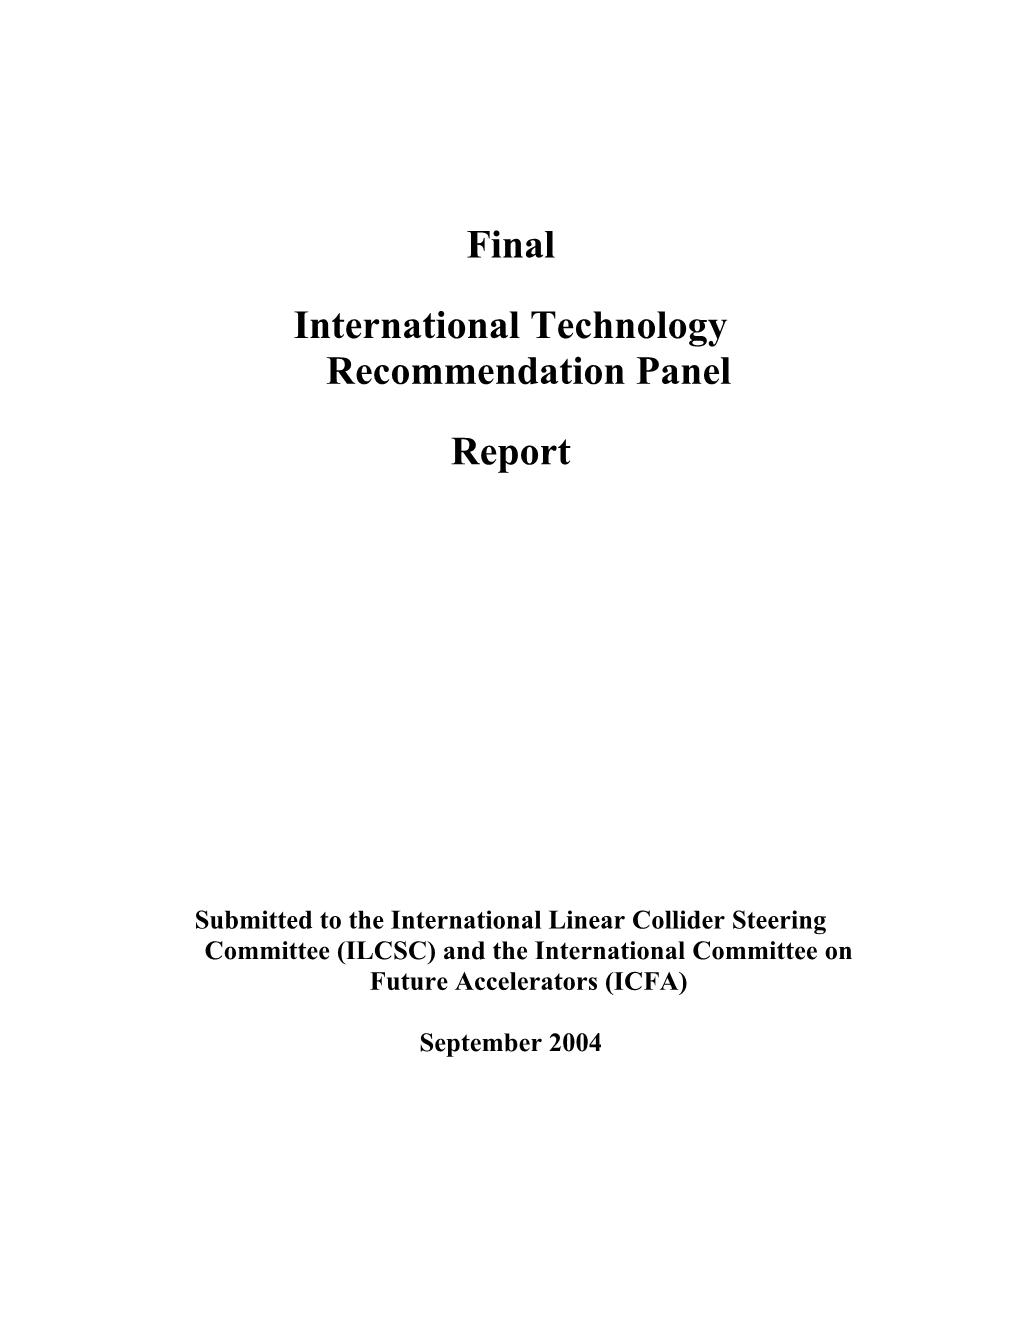 International Technology Recommendation Panel